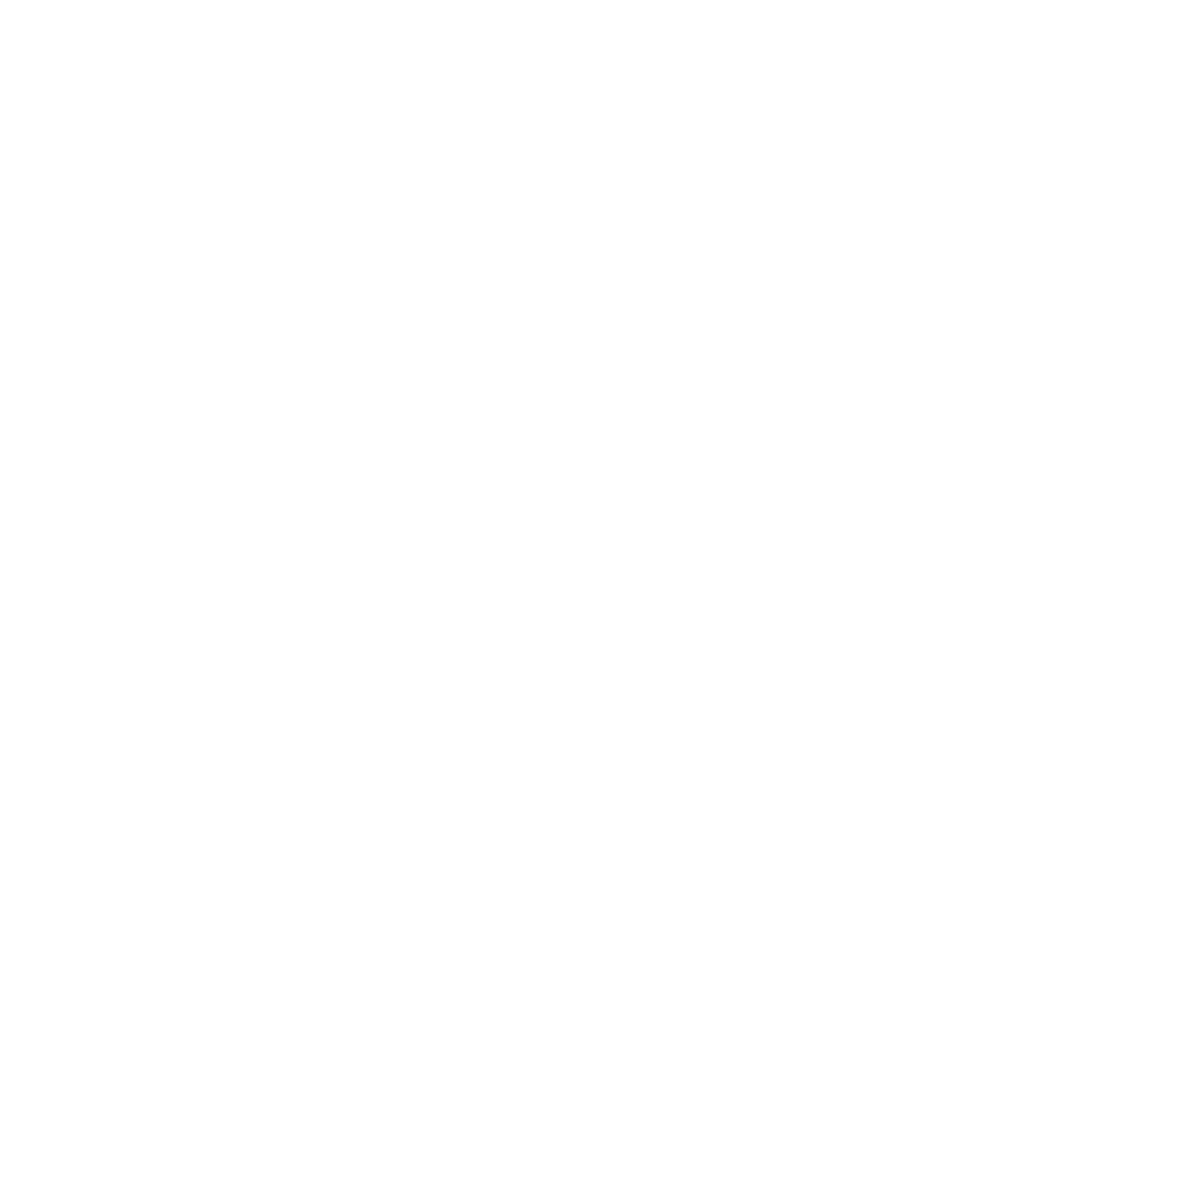 Upcity Best of Creative and Design Winner 2021